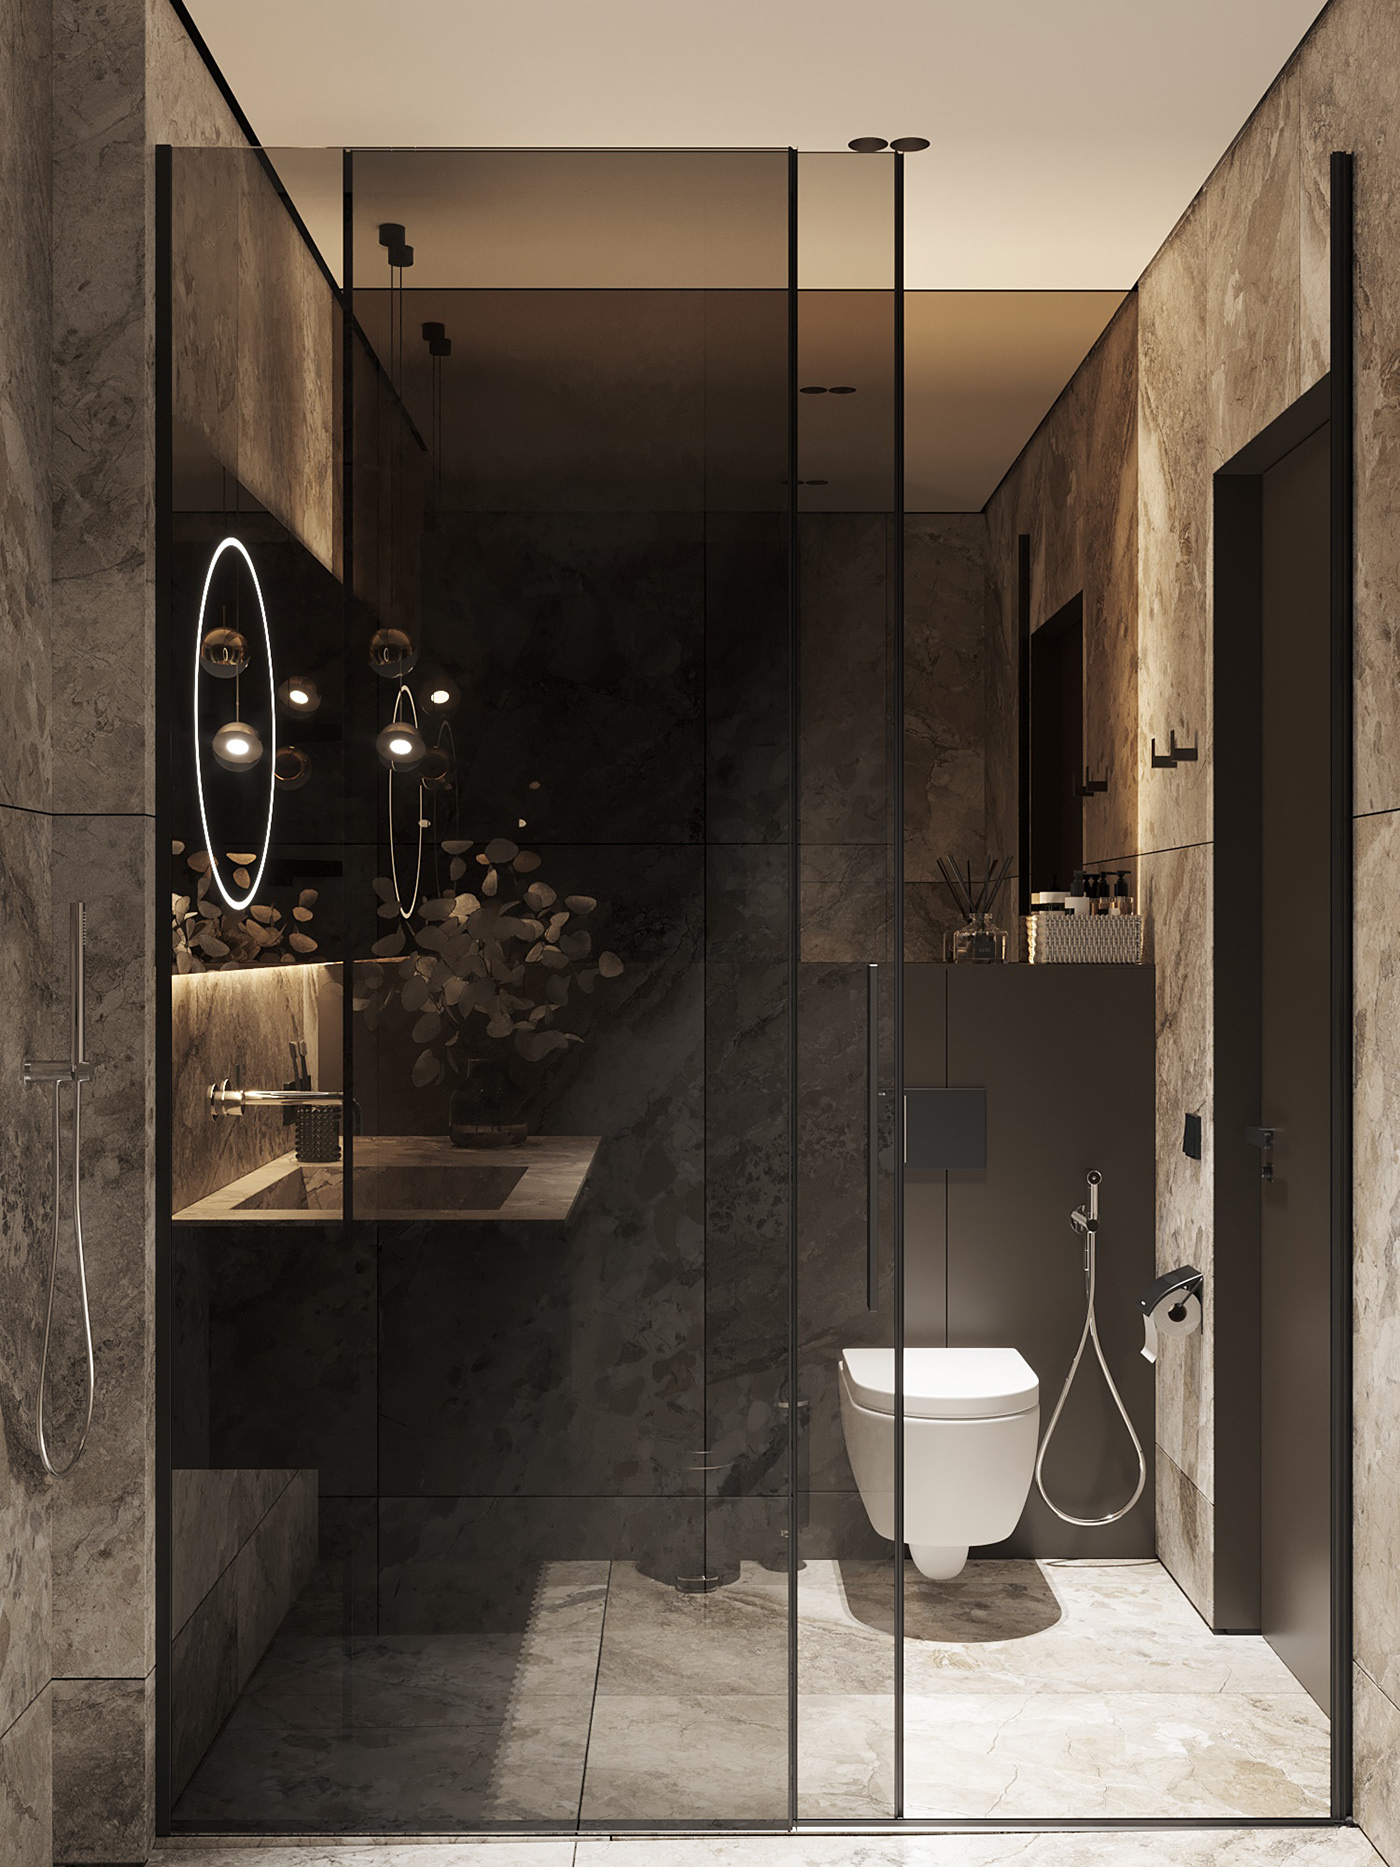 apartment design Interior design bedroom design visualization Render 3ds max modern corona kitchen design